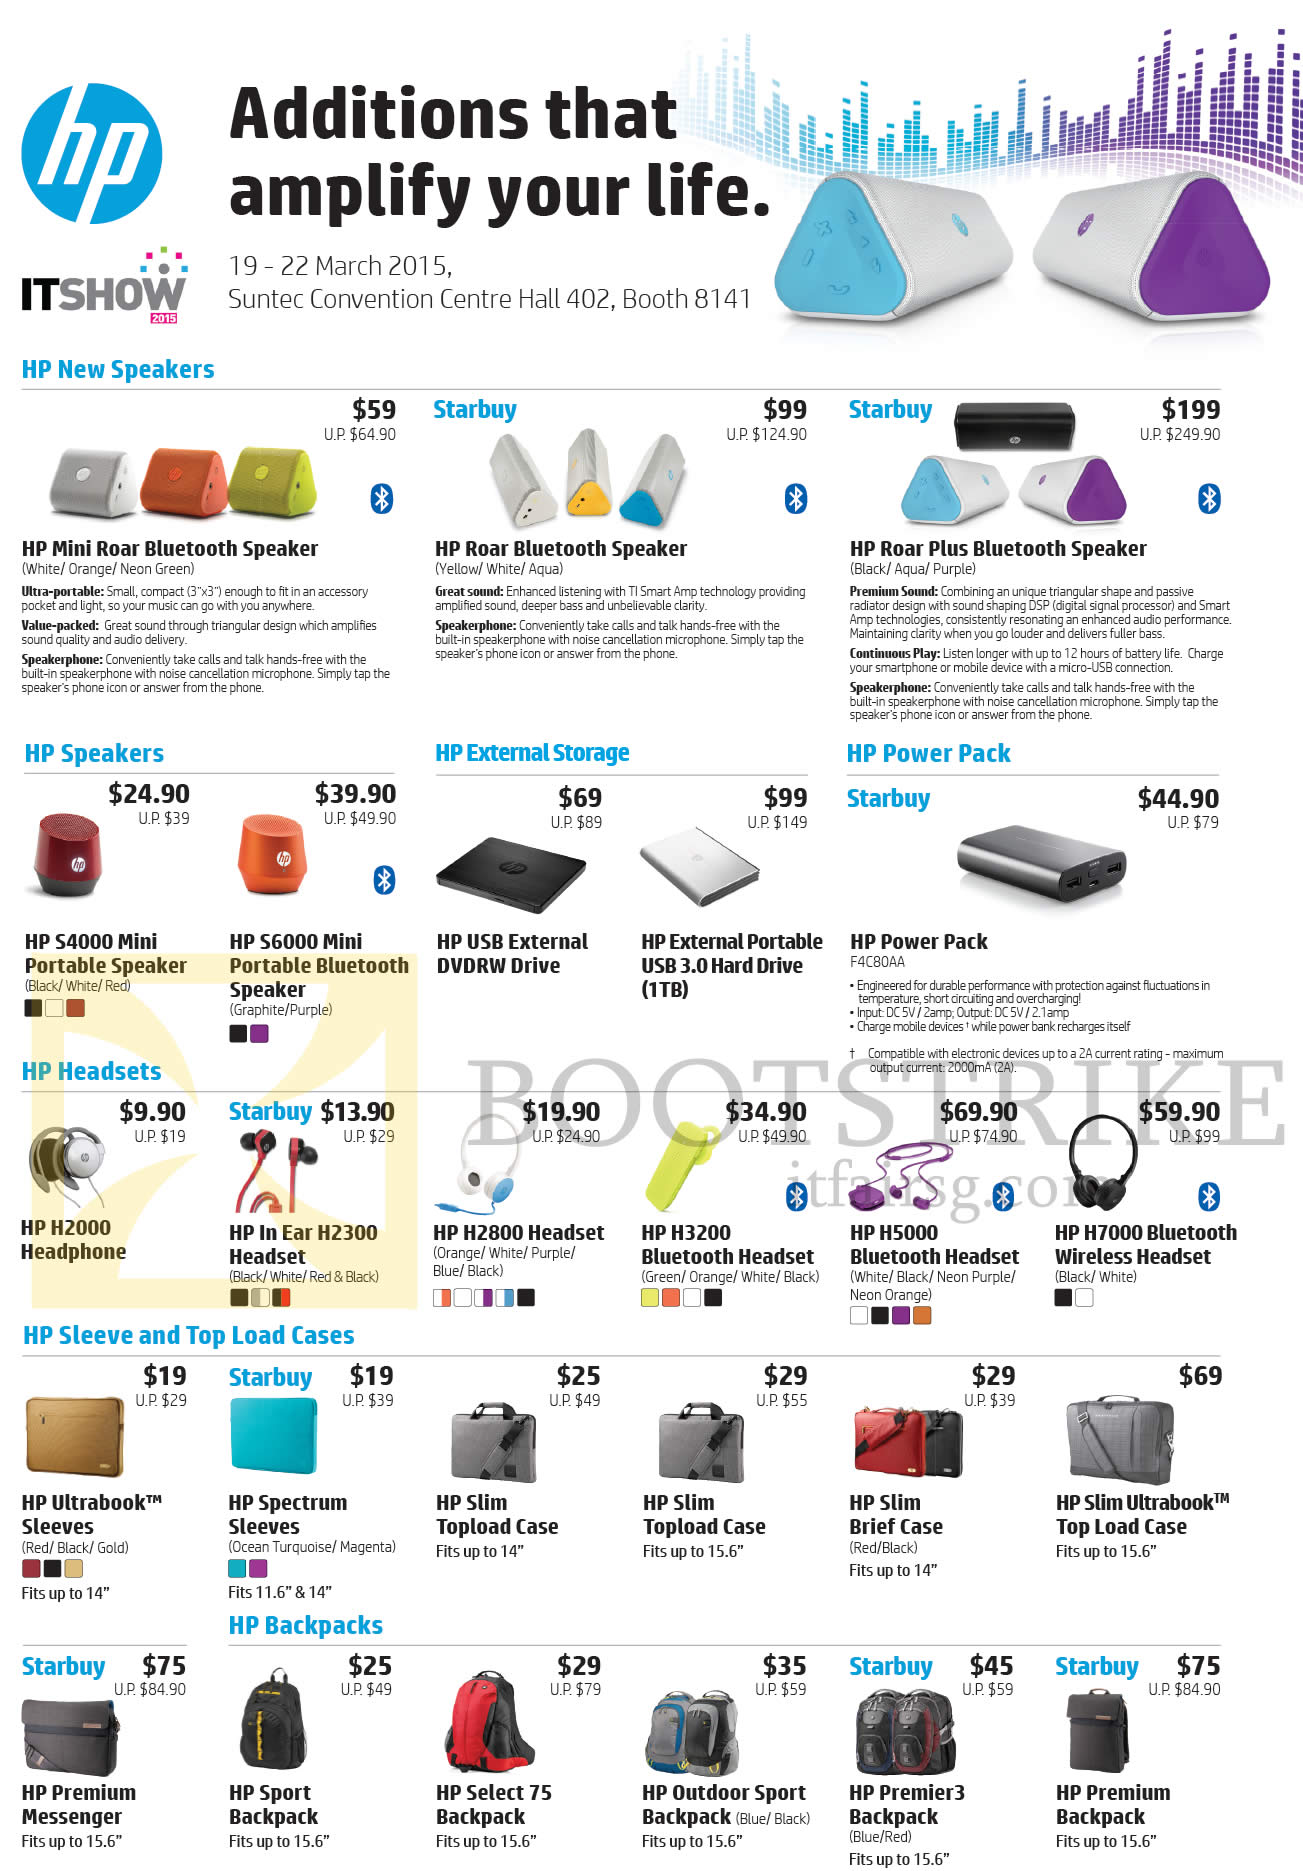 IT SHOW 2015 price list image brochure of HP Speakers, External Storage, Power Pack, Headsets, Sleeve, Top Load Cases, Backpacks, Mini Roar, Messenger, Bag